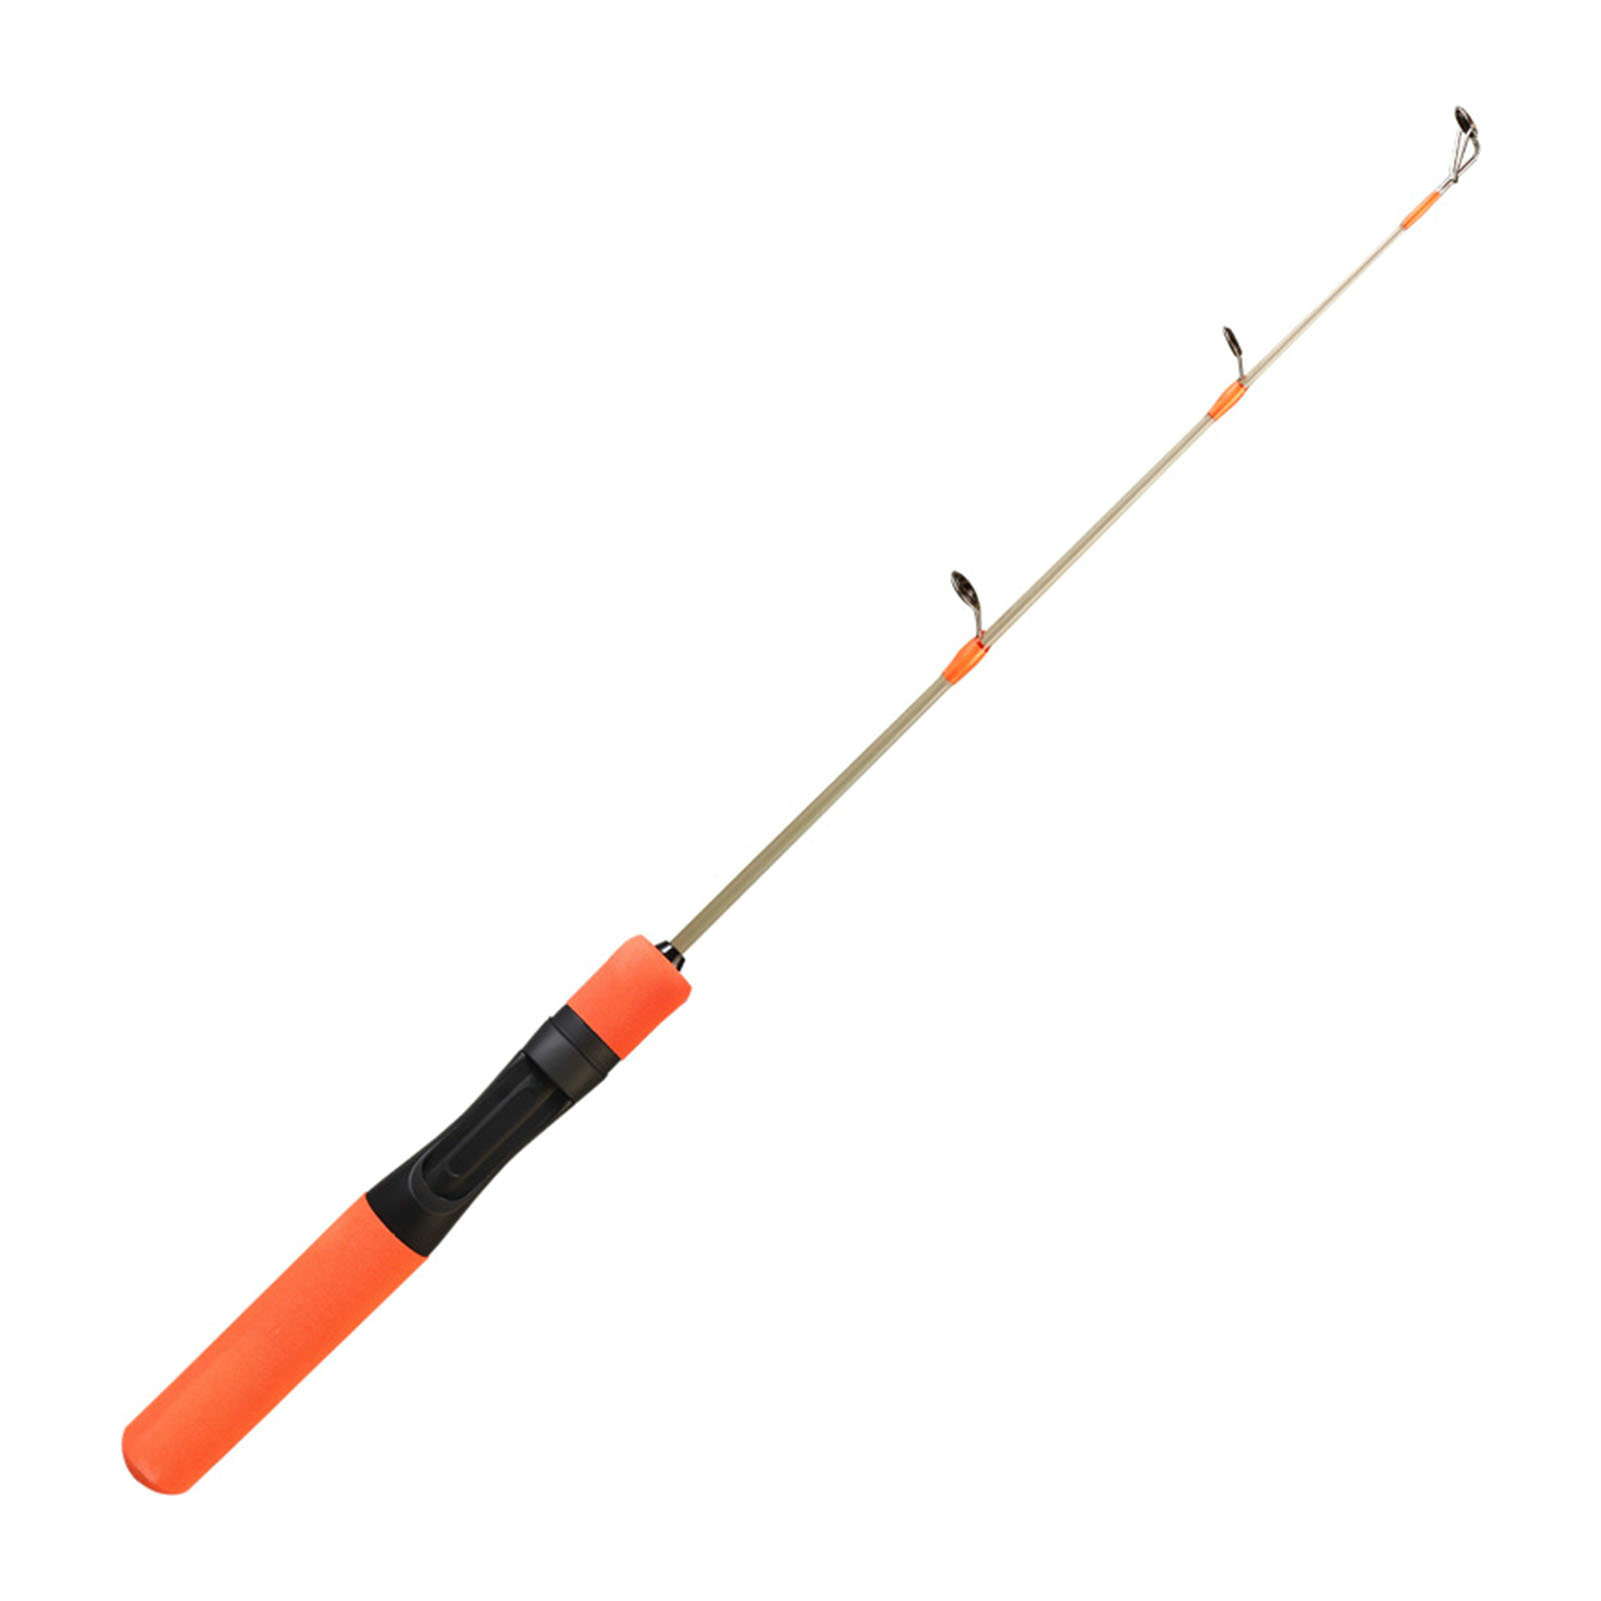 Gloryworld Ice Fishing Pole Fishing Pole Portable Telescopic Ice Fishing  Rod with Ergonomic Handle Ultralight Travel Gear less Than